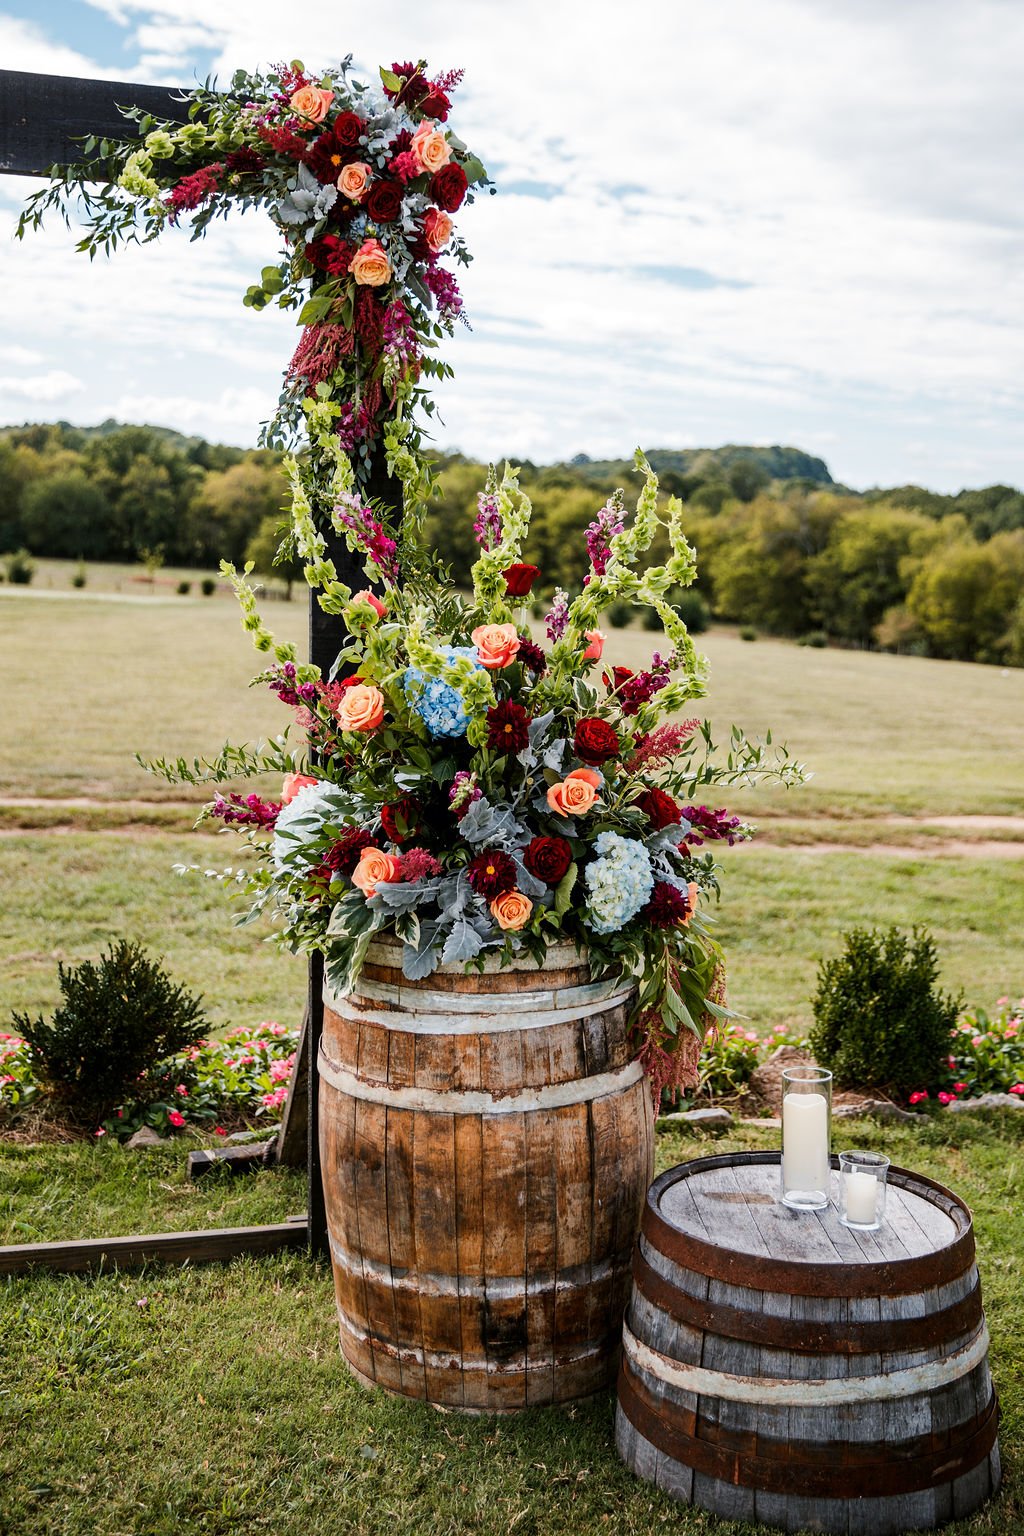 outdoor wedding ceremony set up with lush floral arrangements on barrels